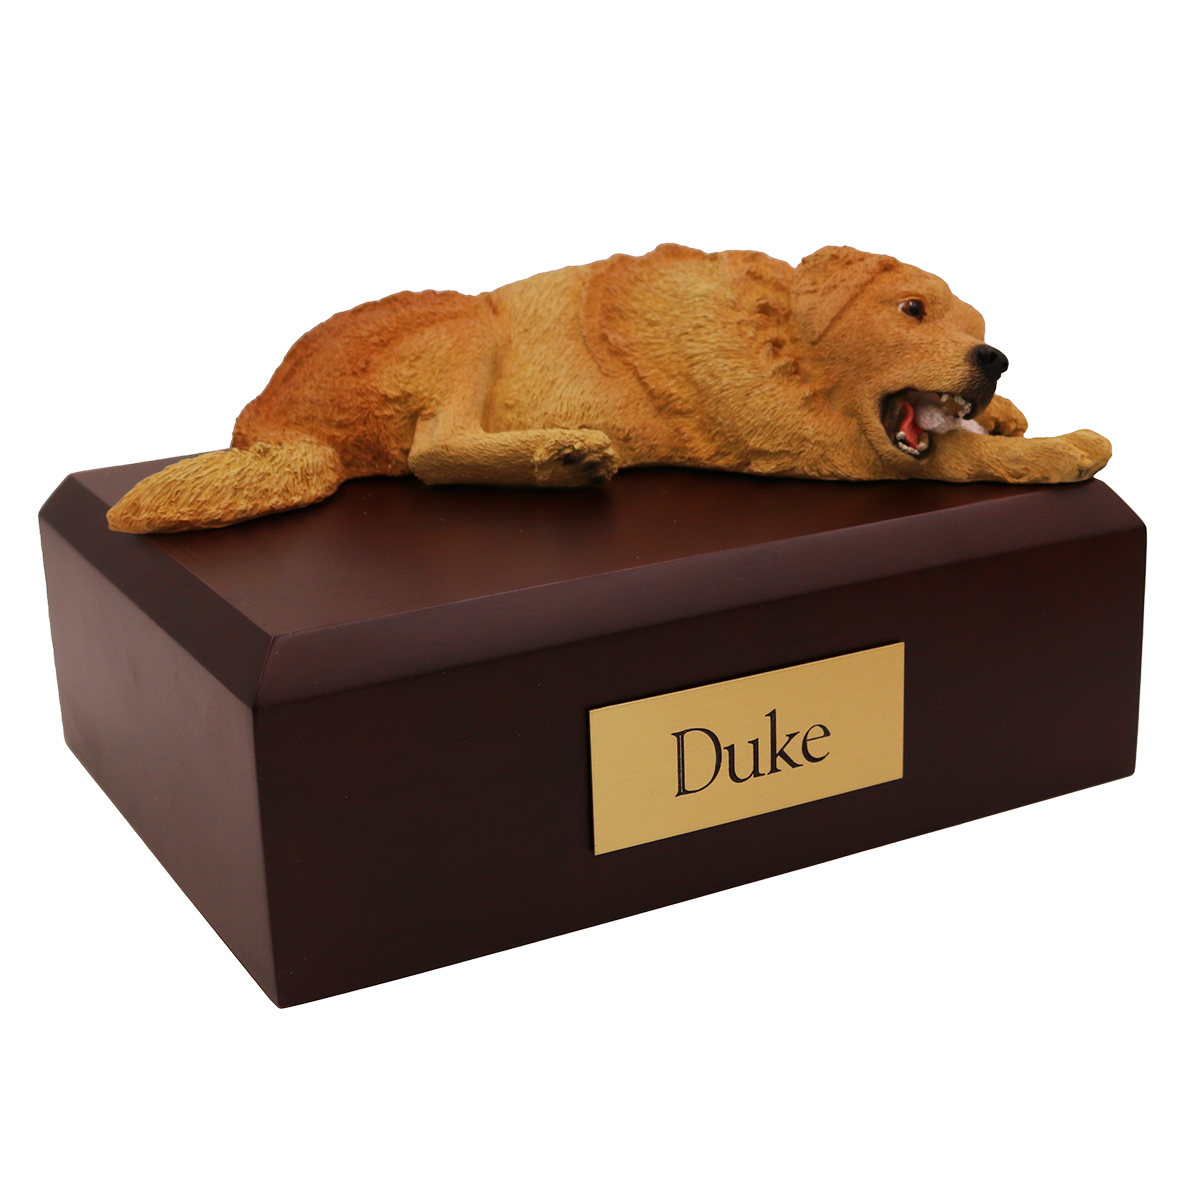 Dog, Golden Retriever, Laying - Figurine Urn